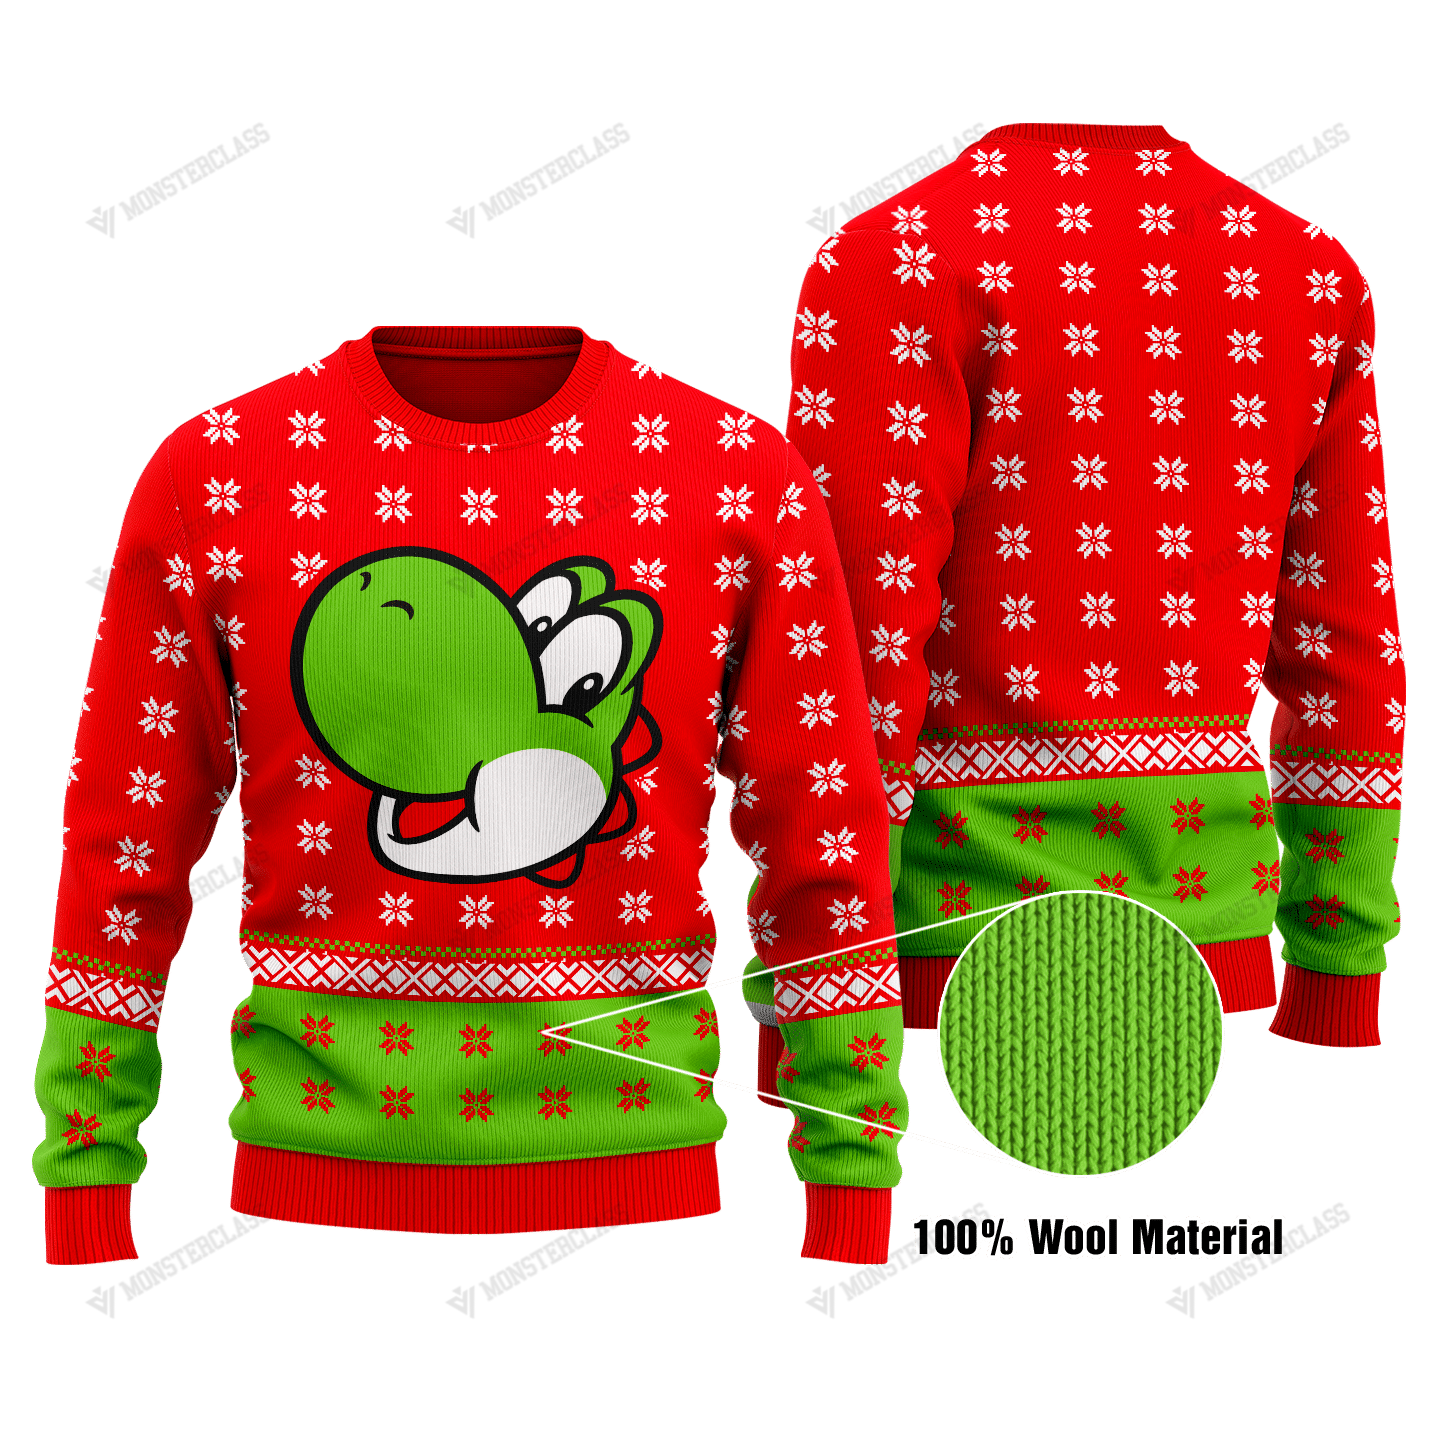 Super Mario Yoshi’s Island christmas sweater